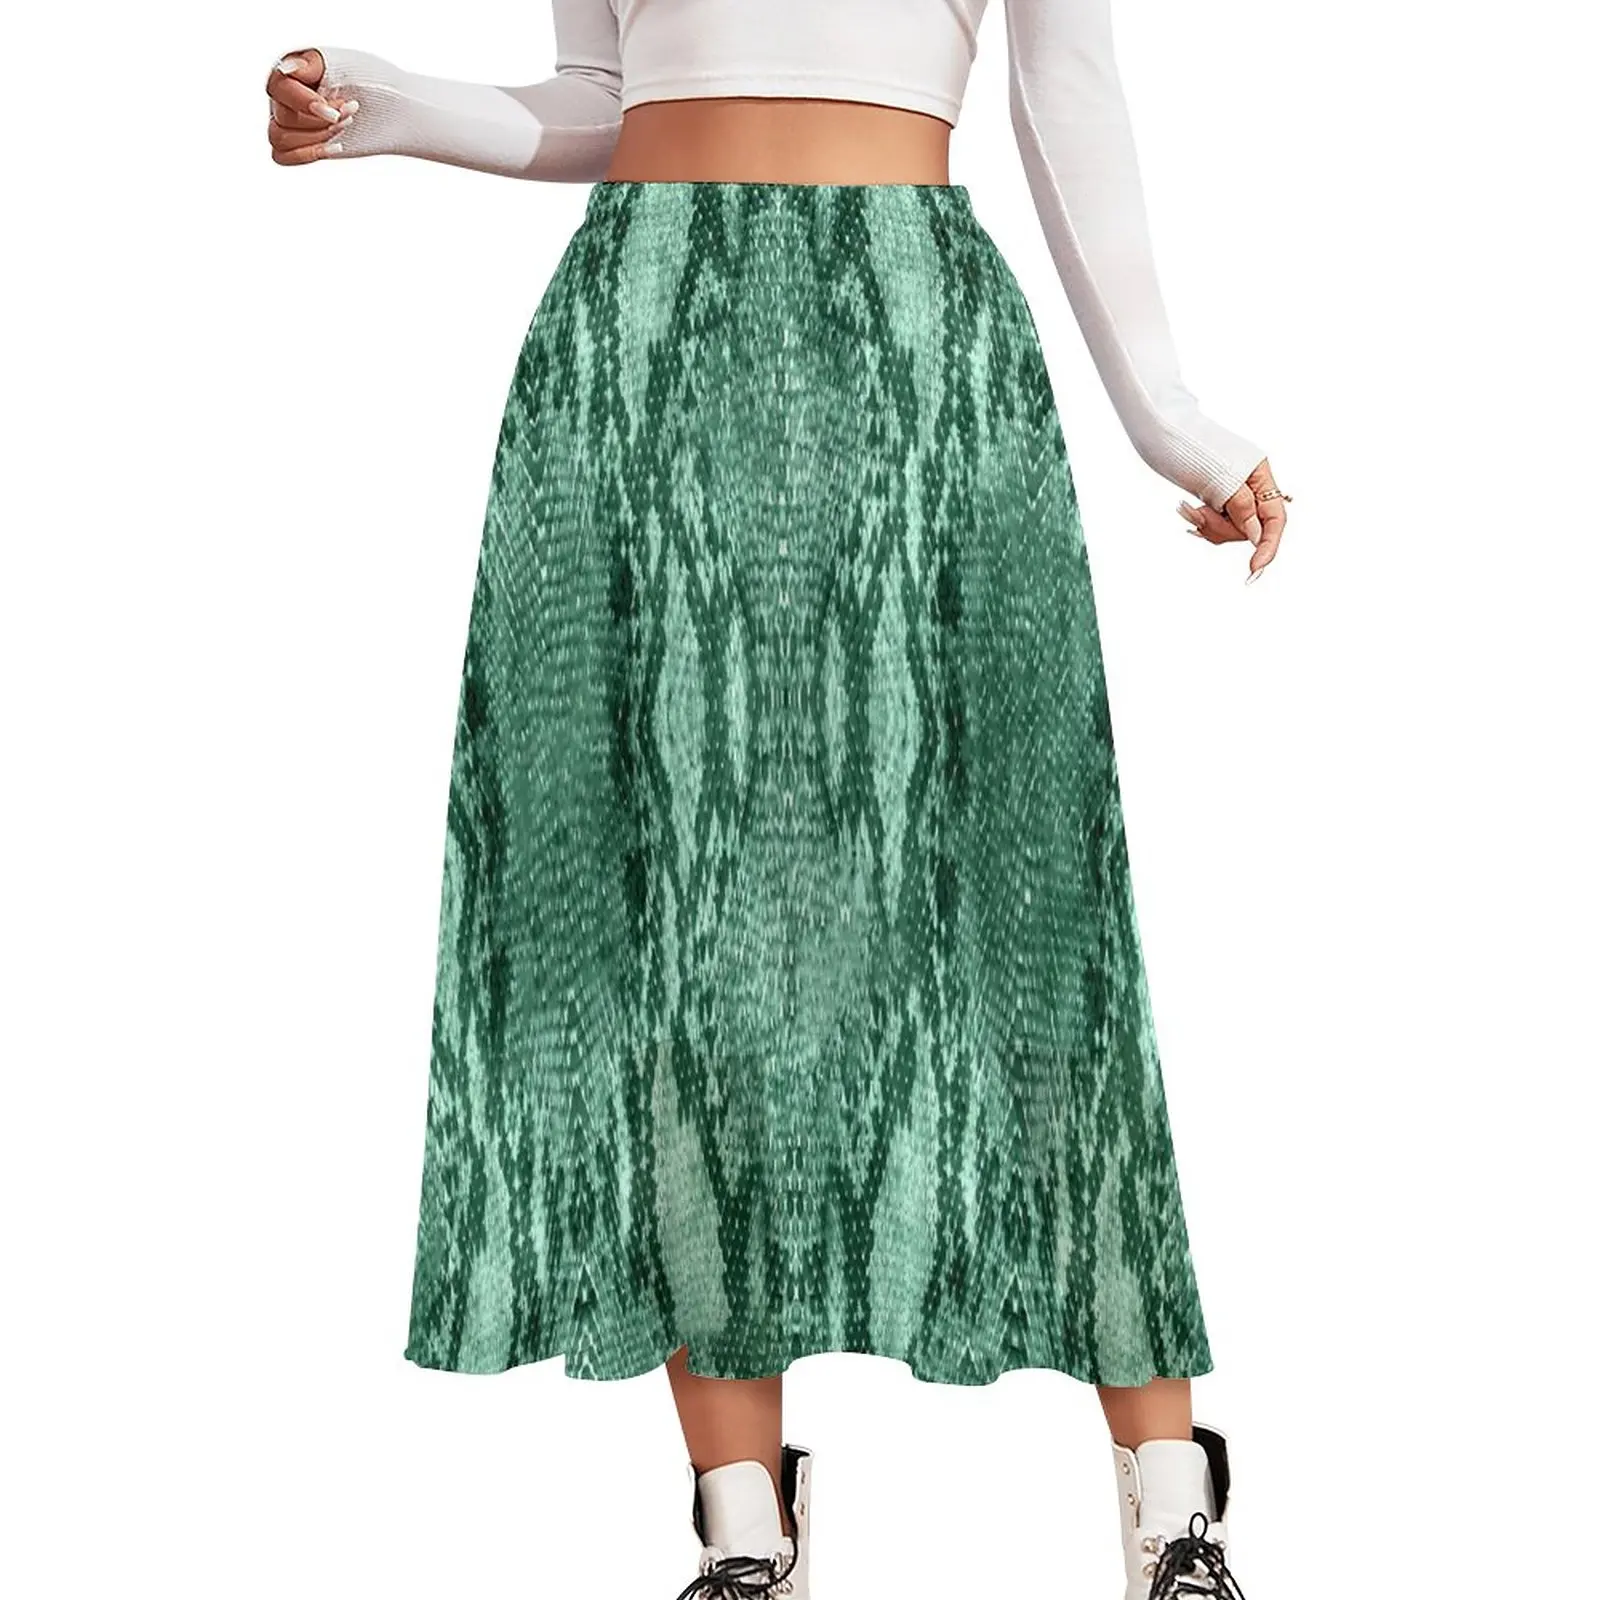 

Snakeskin Print Chiffon Skirt Light Green Animal Street Wear Long Skirts Ladies Cute Boho Skirt Printed Clothes Gift Idea